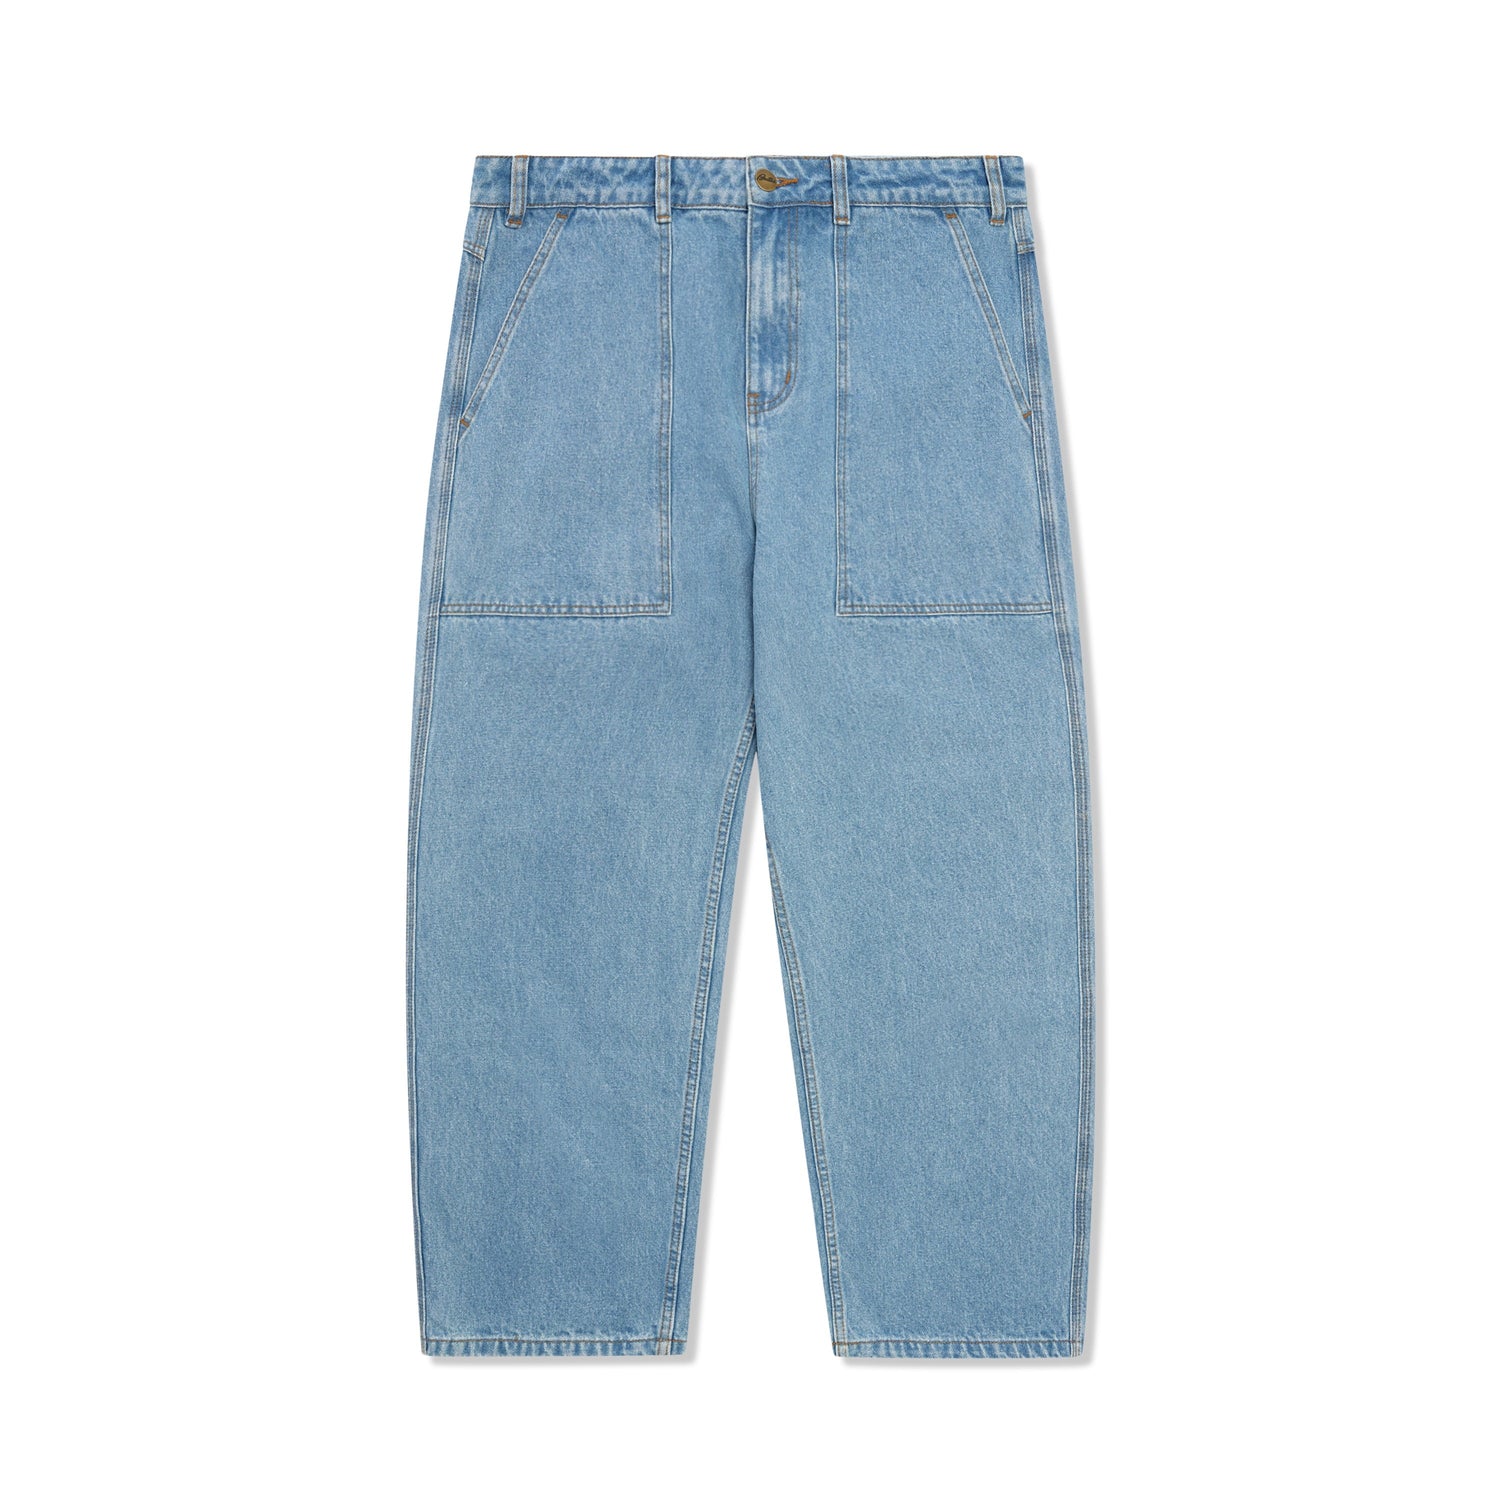 Patch Pocket Denim Jeans, Washed Indigo